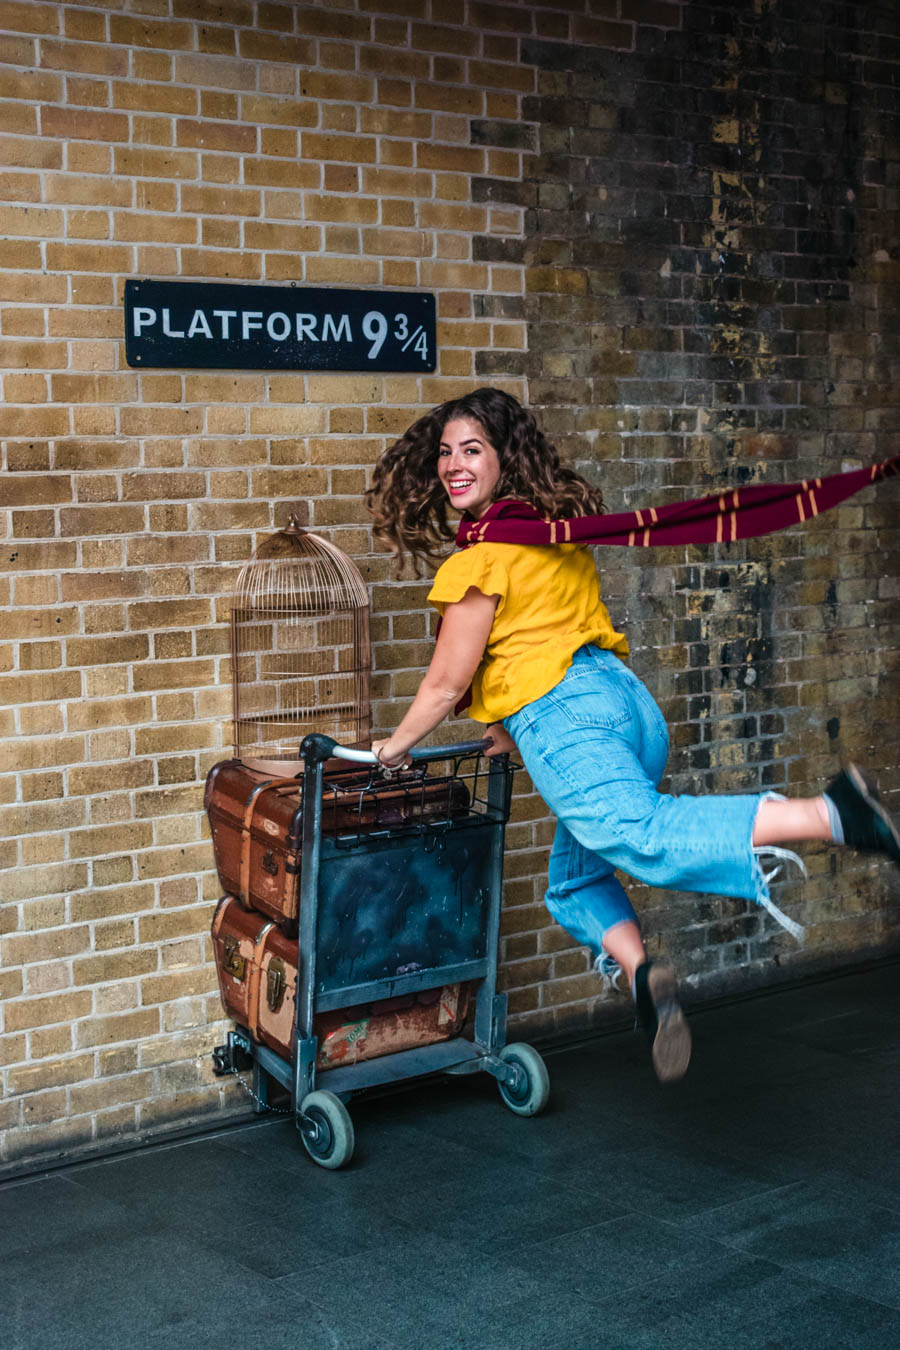 Harry Potter London Itinerary - Platform 9 3/4